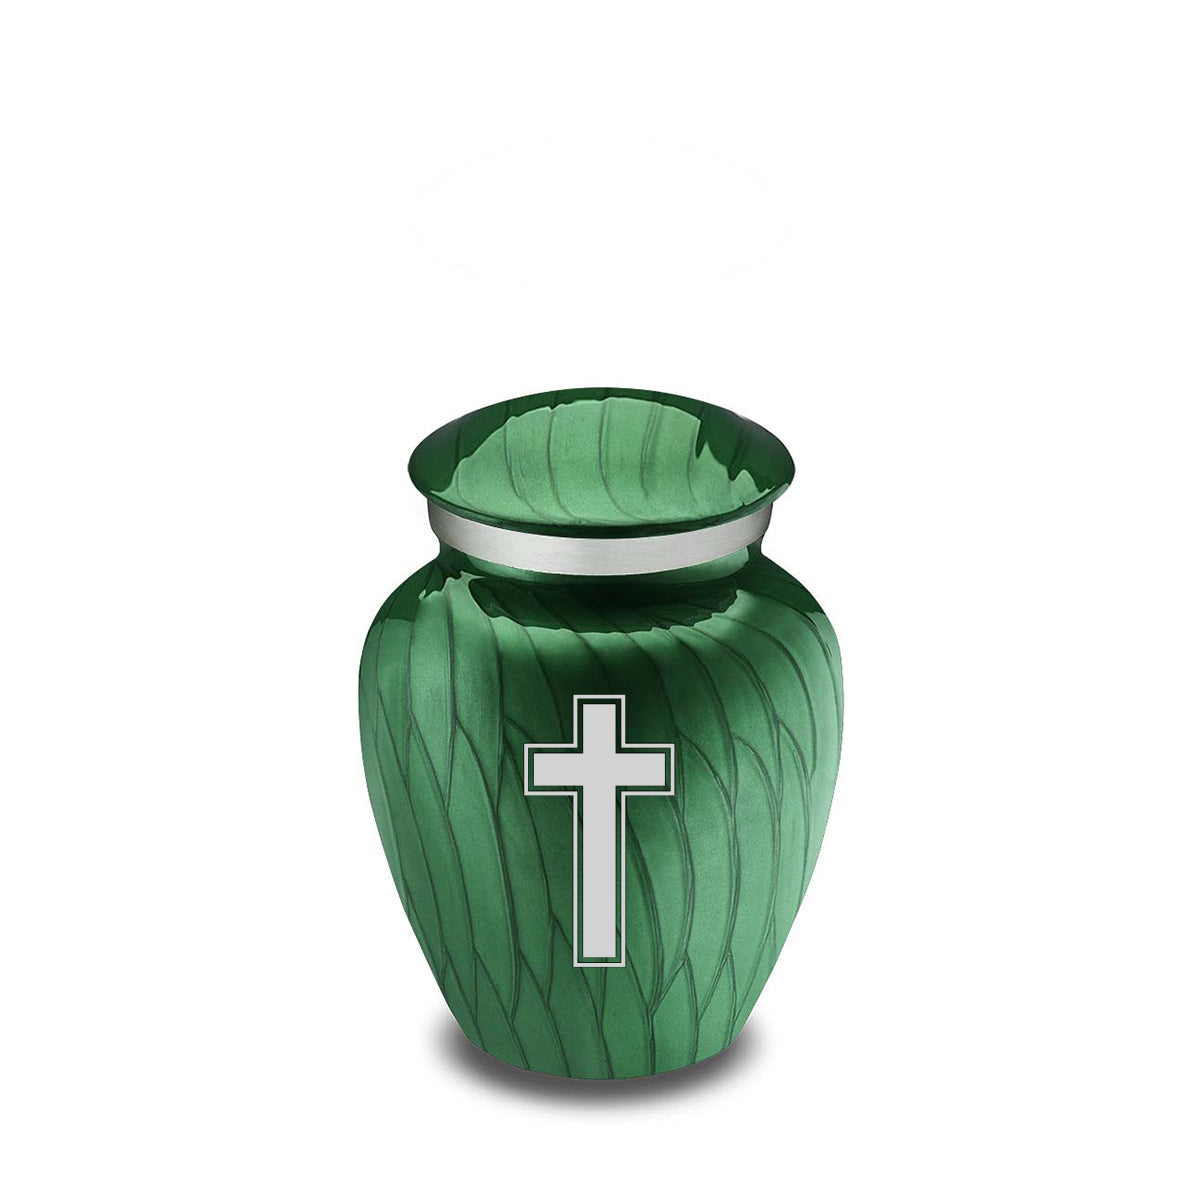 Keepsake Embrace Pearl Green Simple Cross Cremation Urn